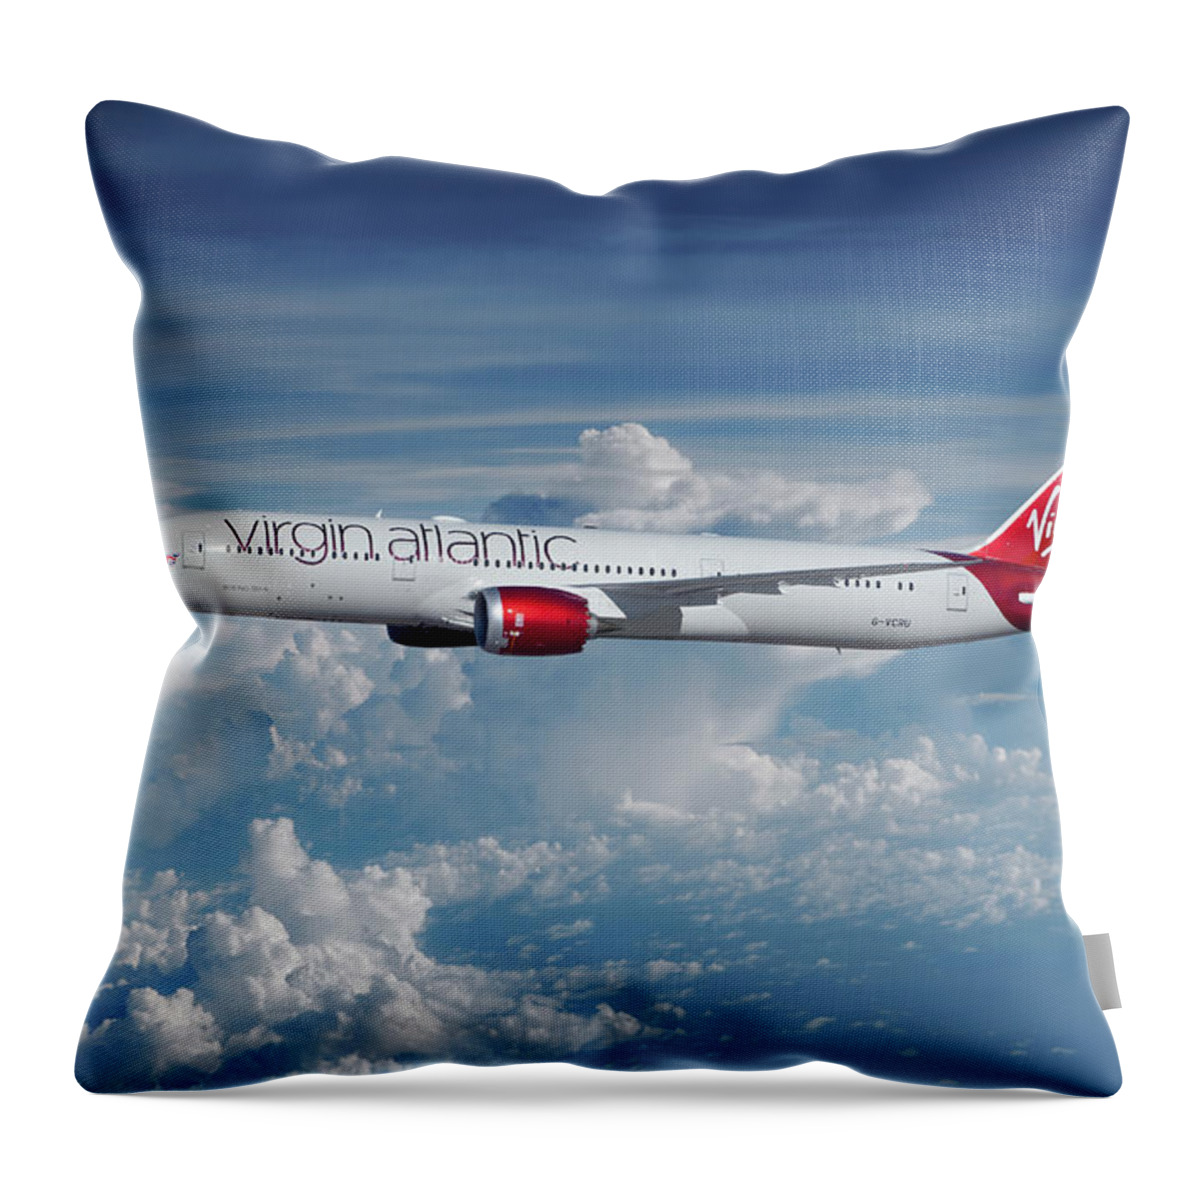 Virgin Atlantis Airlines Throw Pillow featuring the mixed media Virgin Atlantic Dreamliner by Erik Simonsen